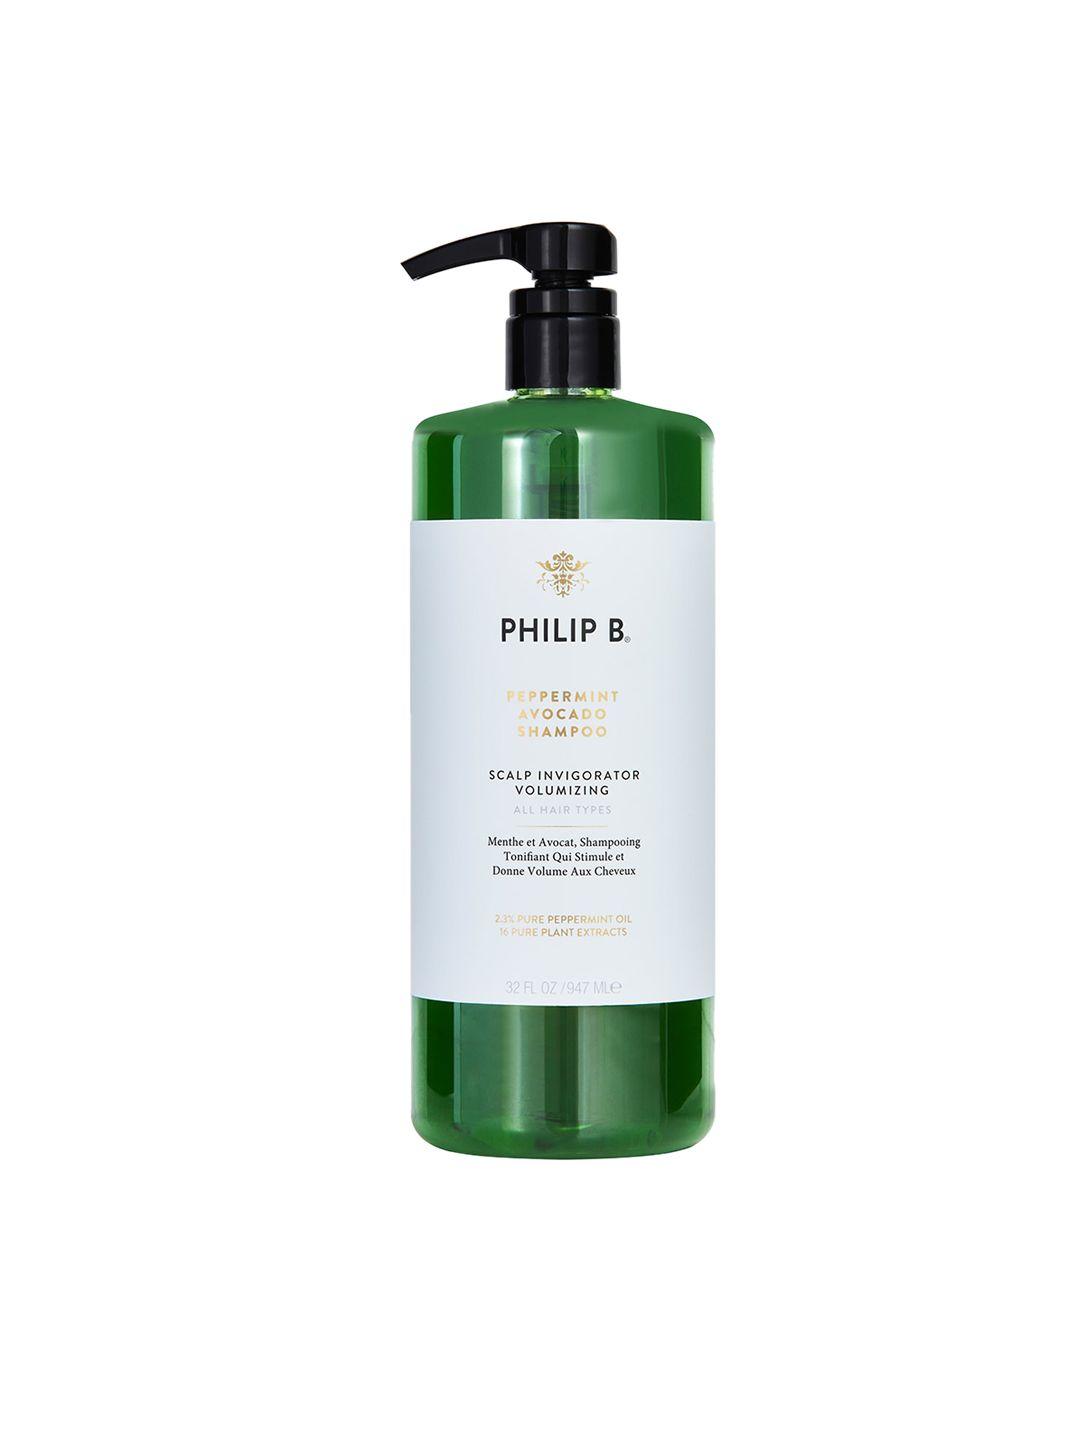 philip b peppermint avocado scalp invigorator volumizing shampoo - 947ml